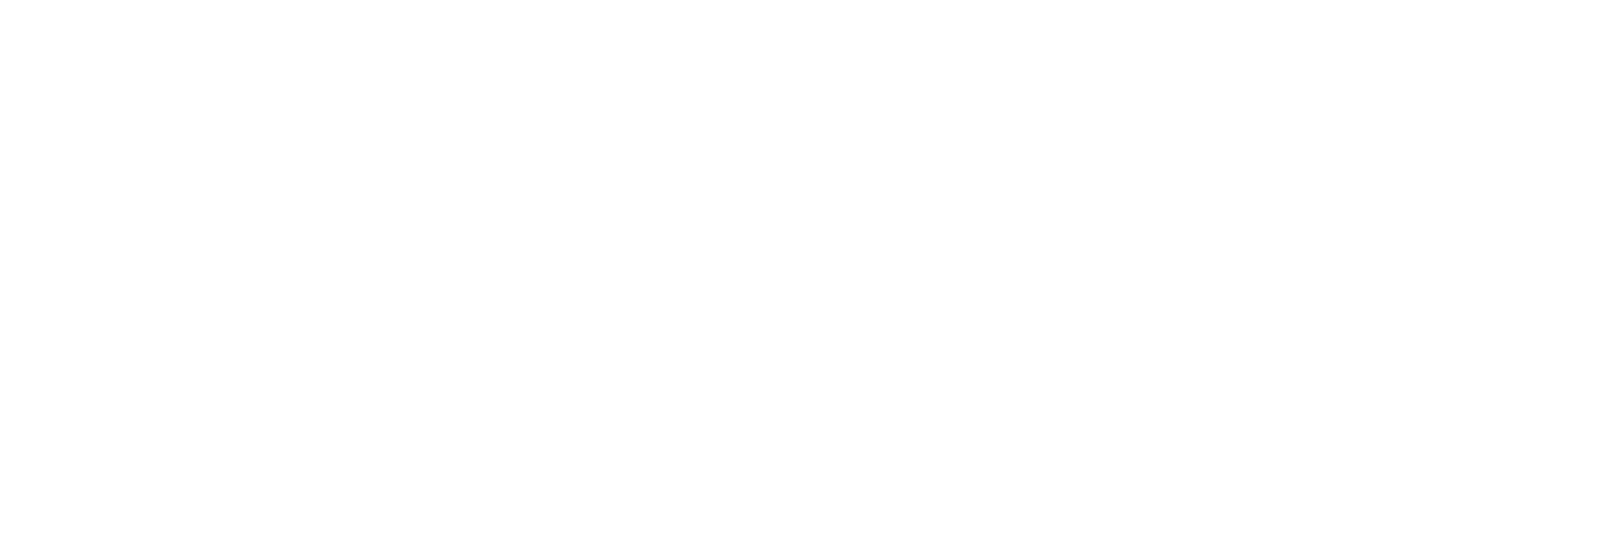 Fila logo pour fonds sombres (PNG transparent)